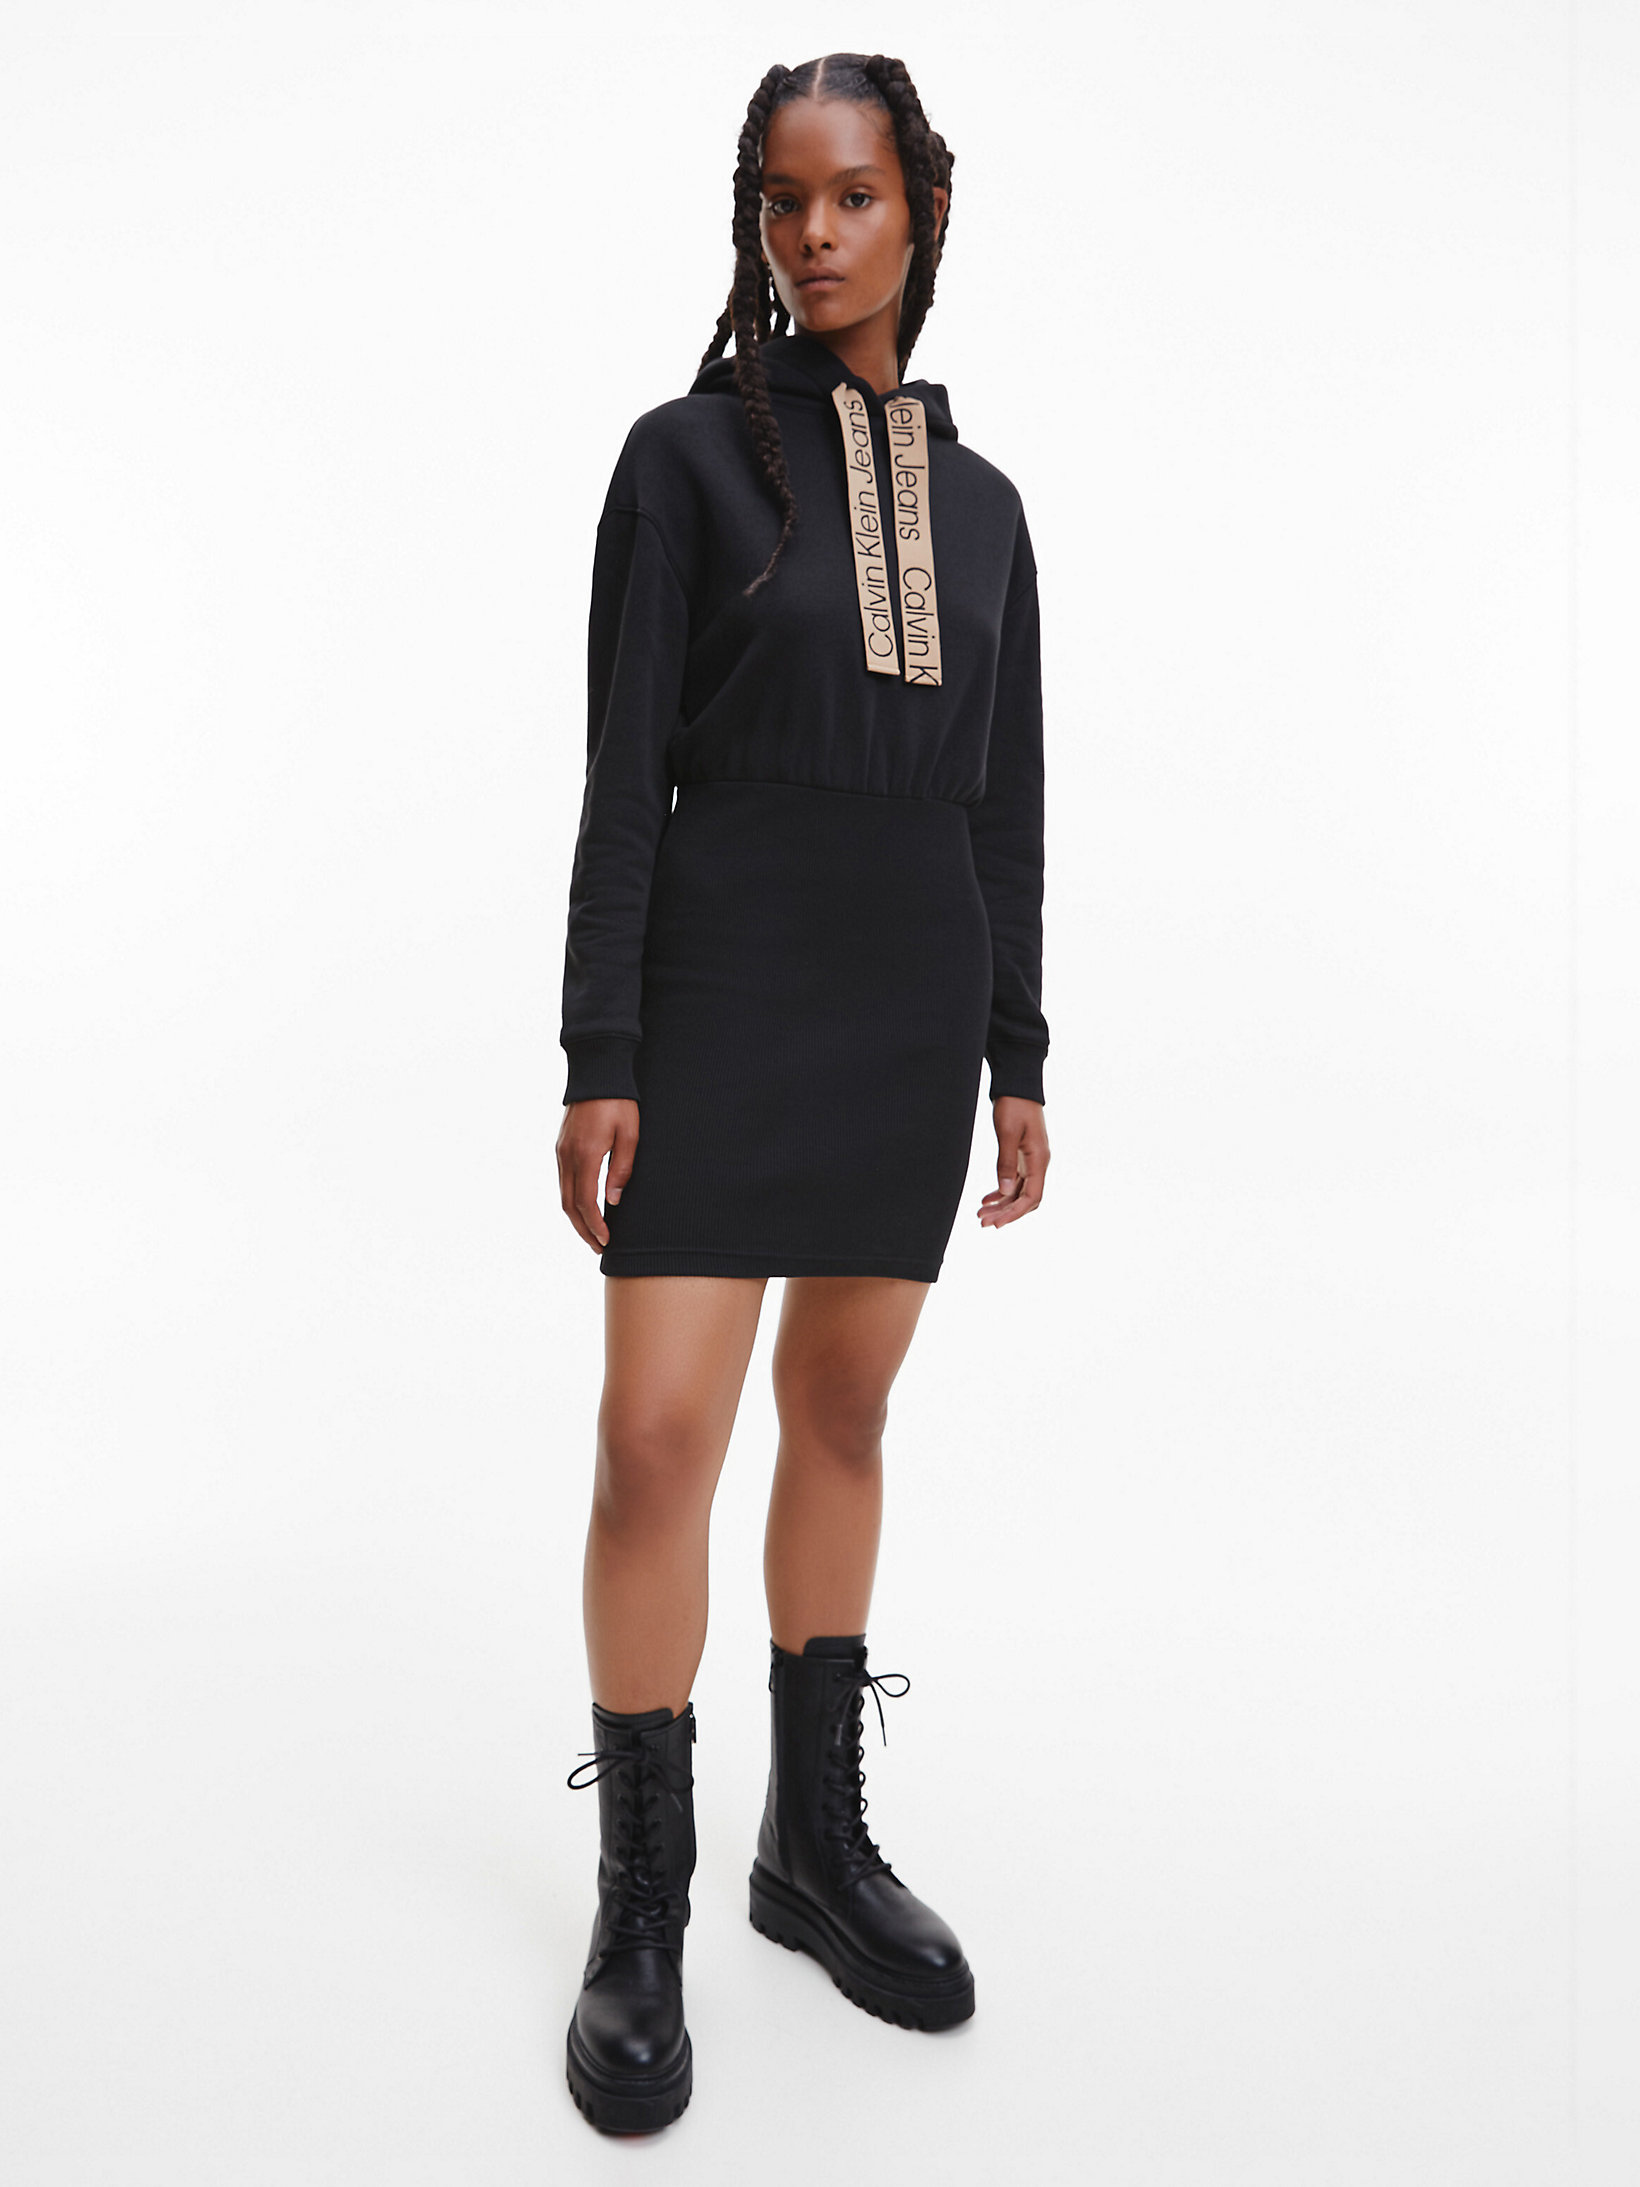 CK Black Logo Tape Hooded Sweatshirt Dress undefined women Calvin Klein